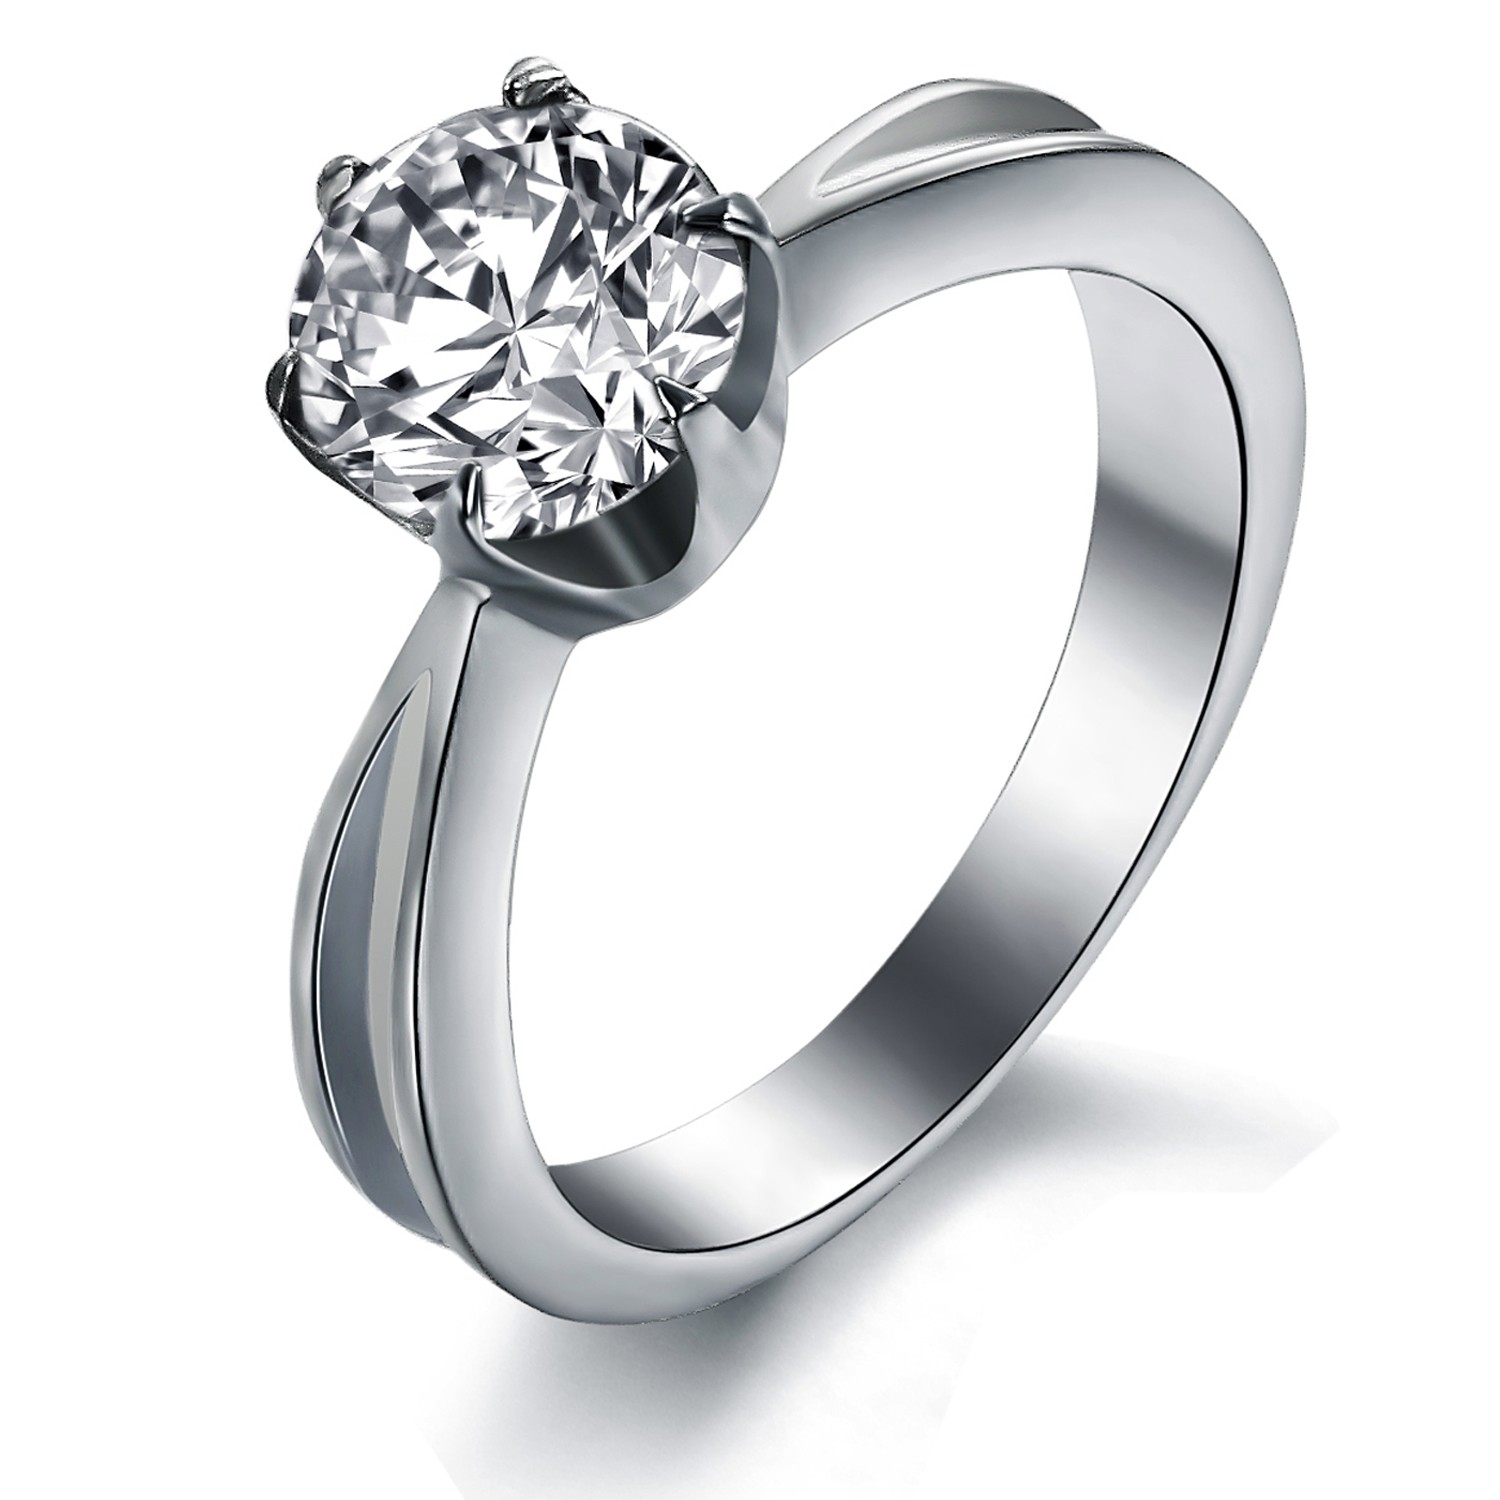 Exquisite Zircon Stainless Steel Engagement Wedding Ring GJ4528